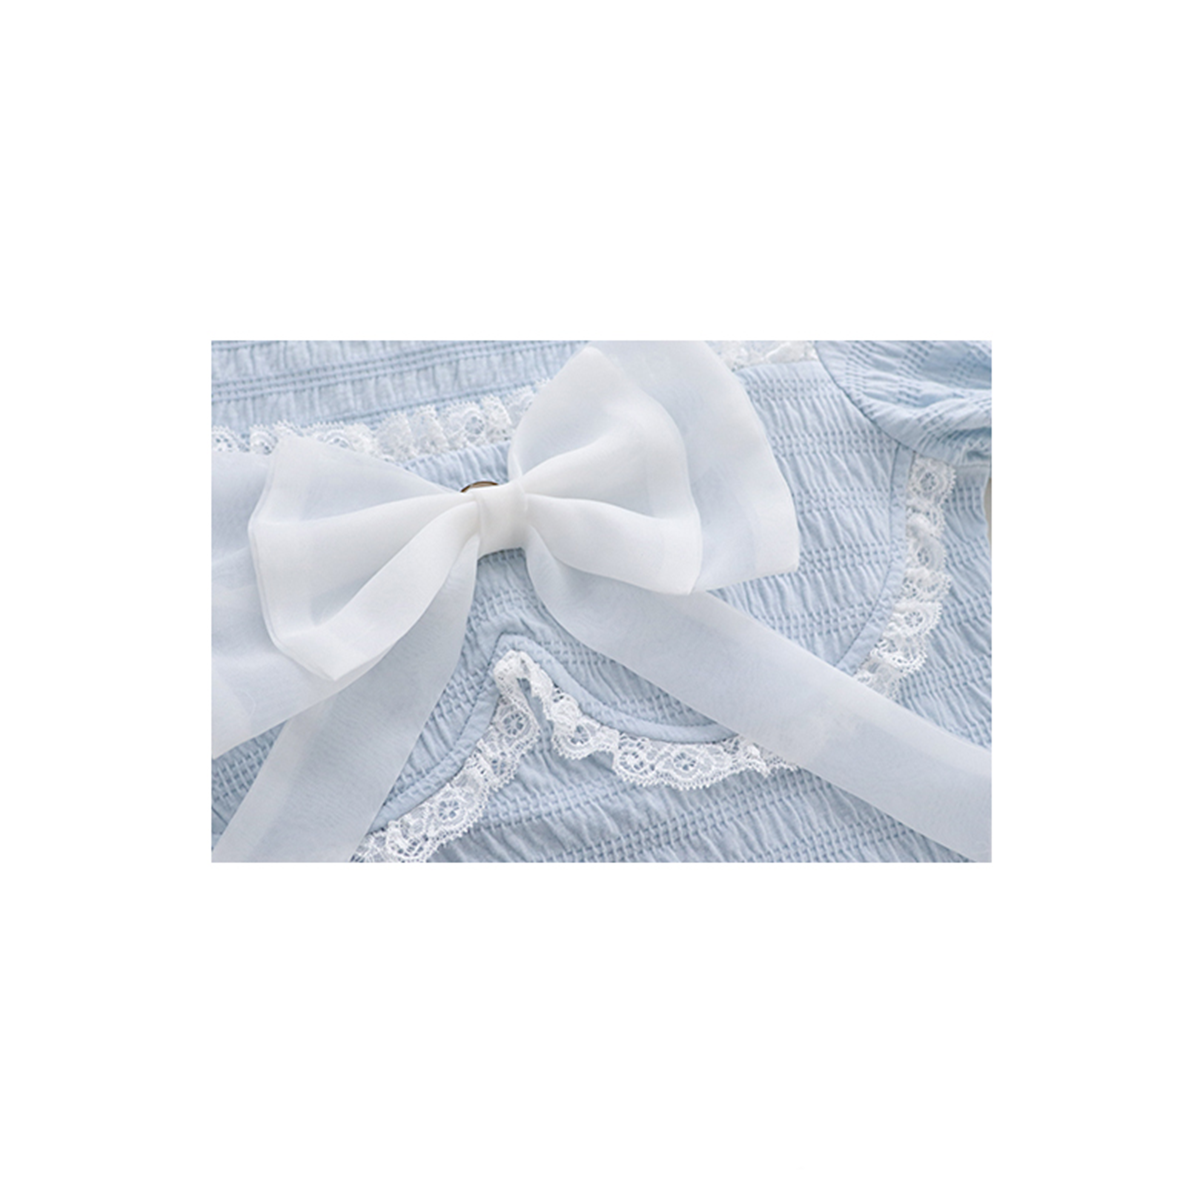 Pure Desire Square Collar Blue Bow Short-Sleeved Top Summer Gentle And Sweet Waist Short T-Shirt - Jam Garden